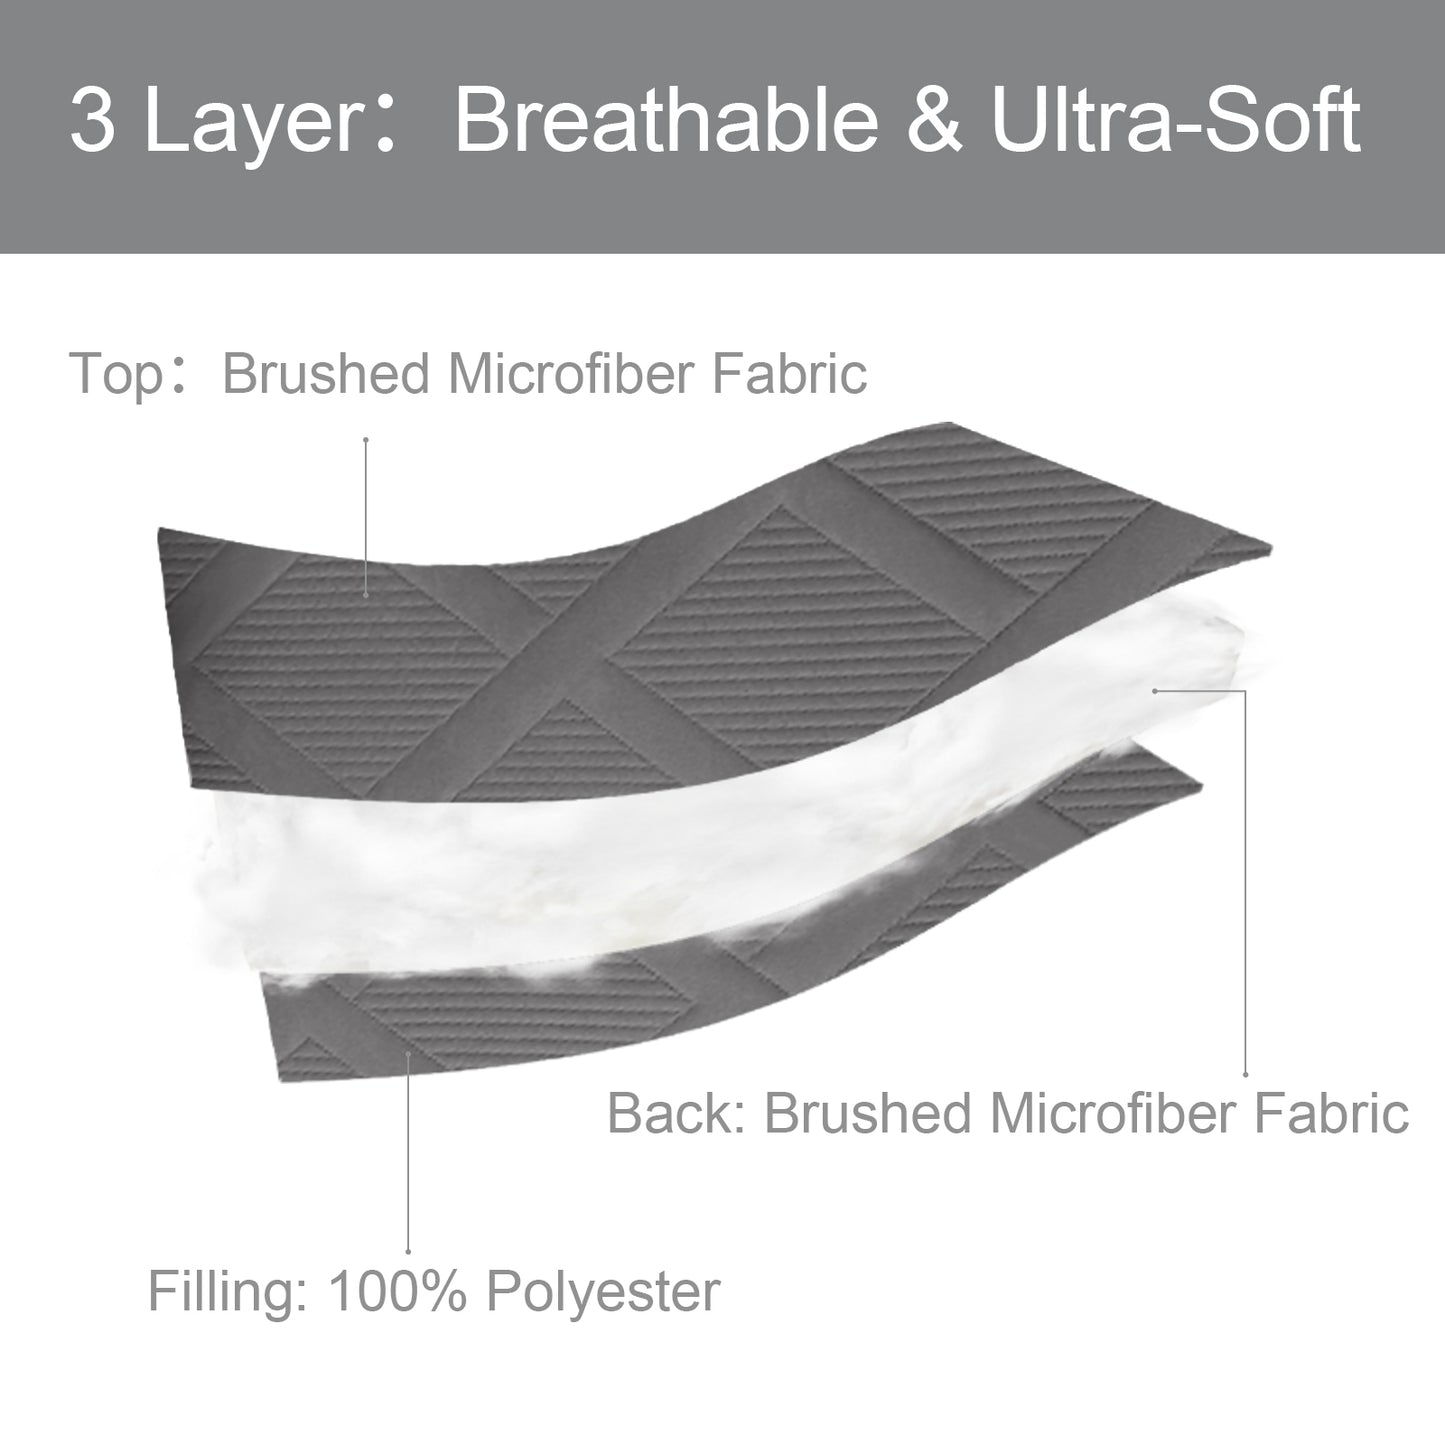 Exclusivo Mezcla Ultrasonic Twin/ Twin XL Quilt Set, Lightweight Bedspreads Modern Striped Coverlet with 1 Pillow Sham, Grey